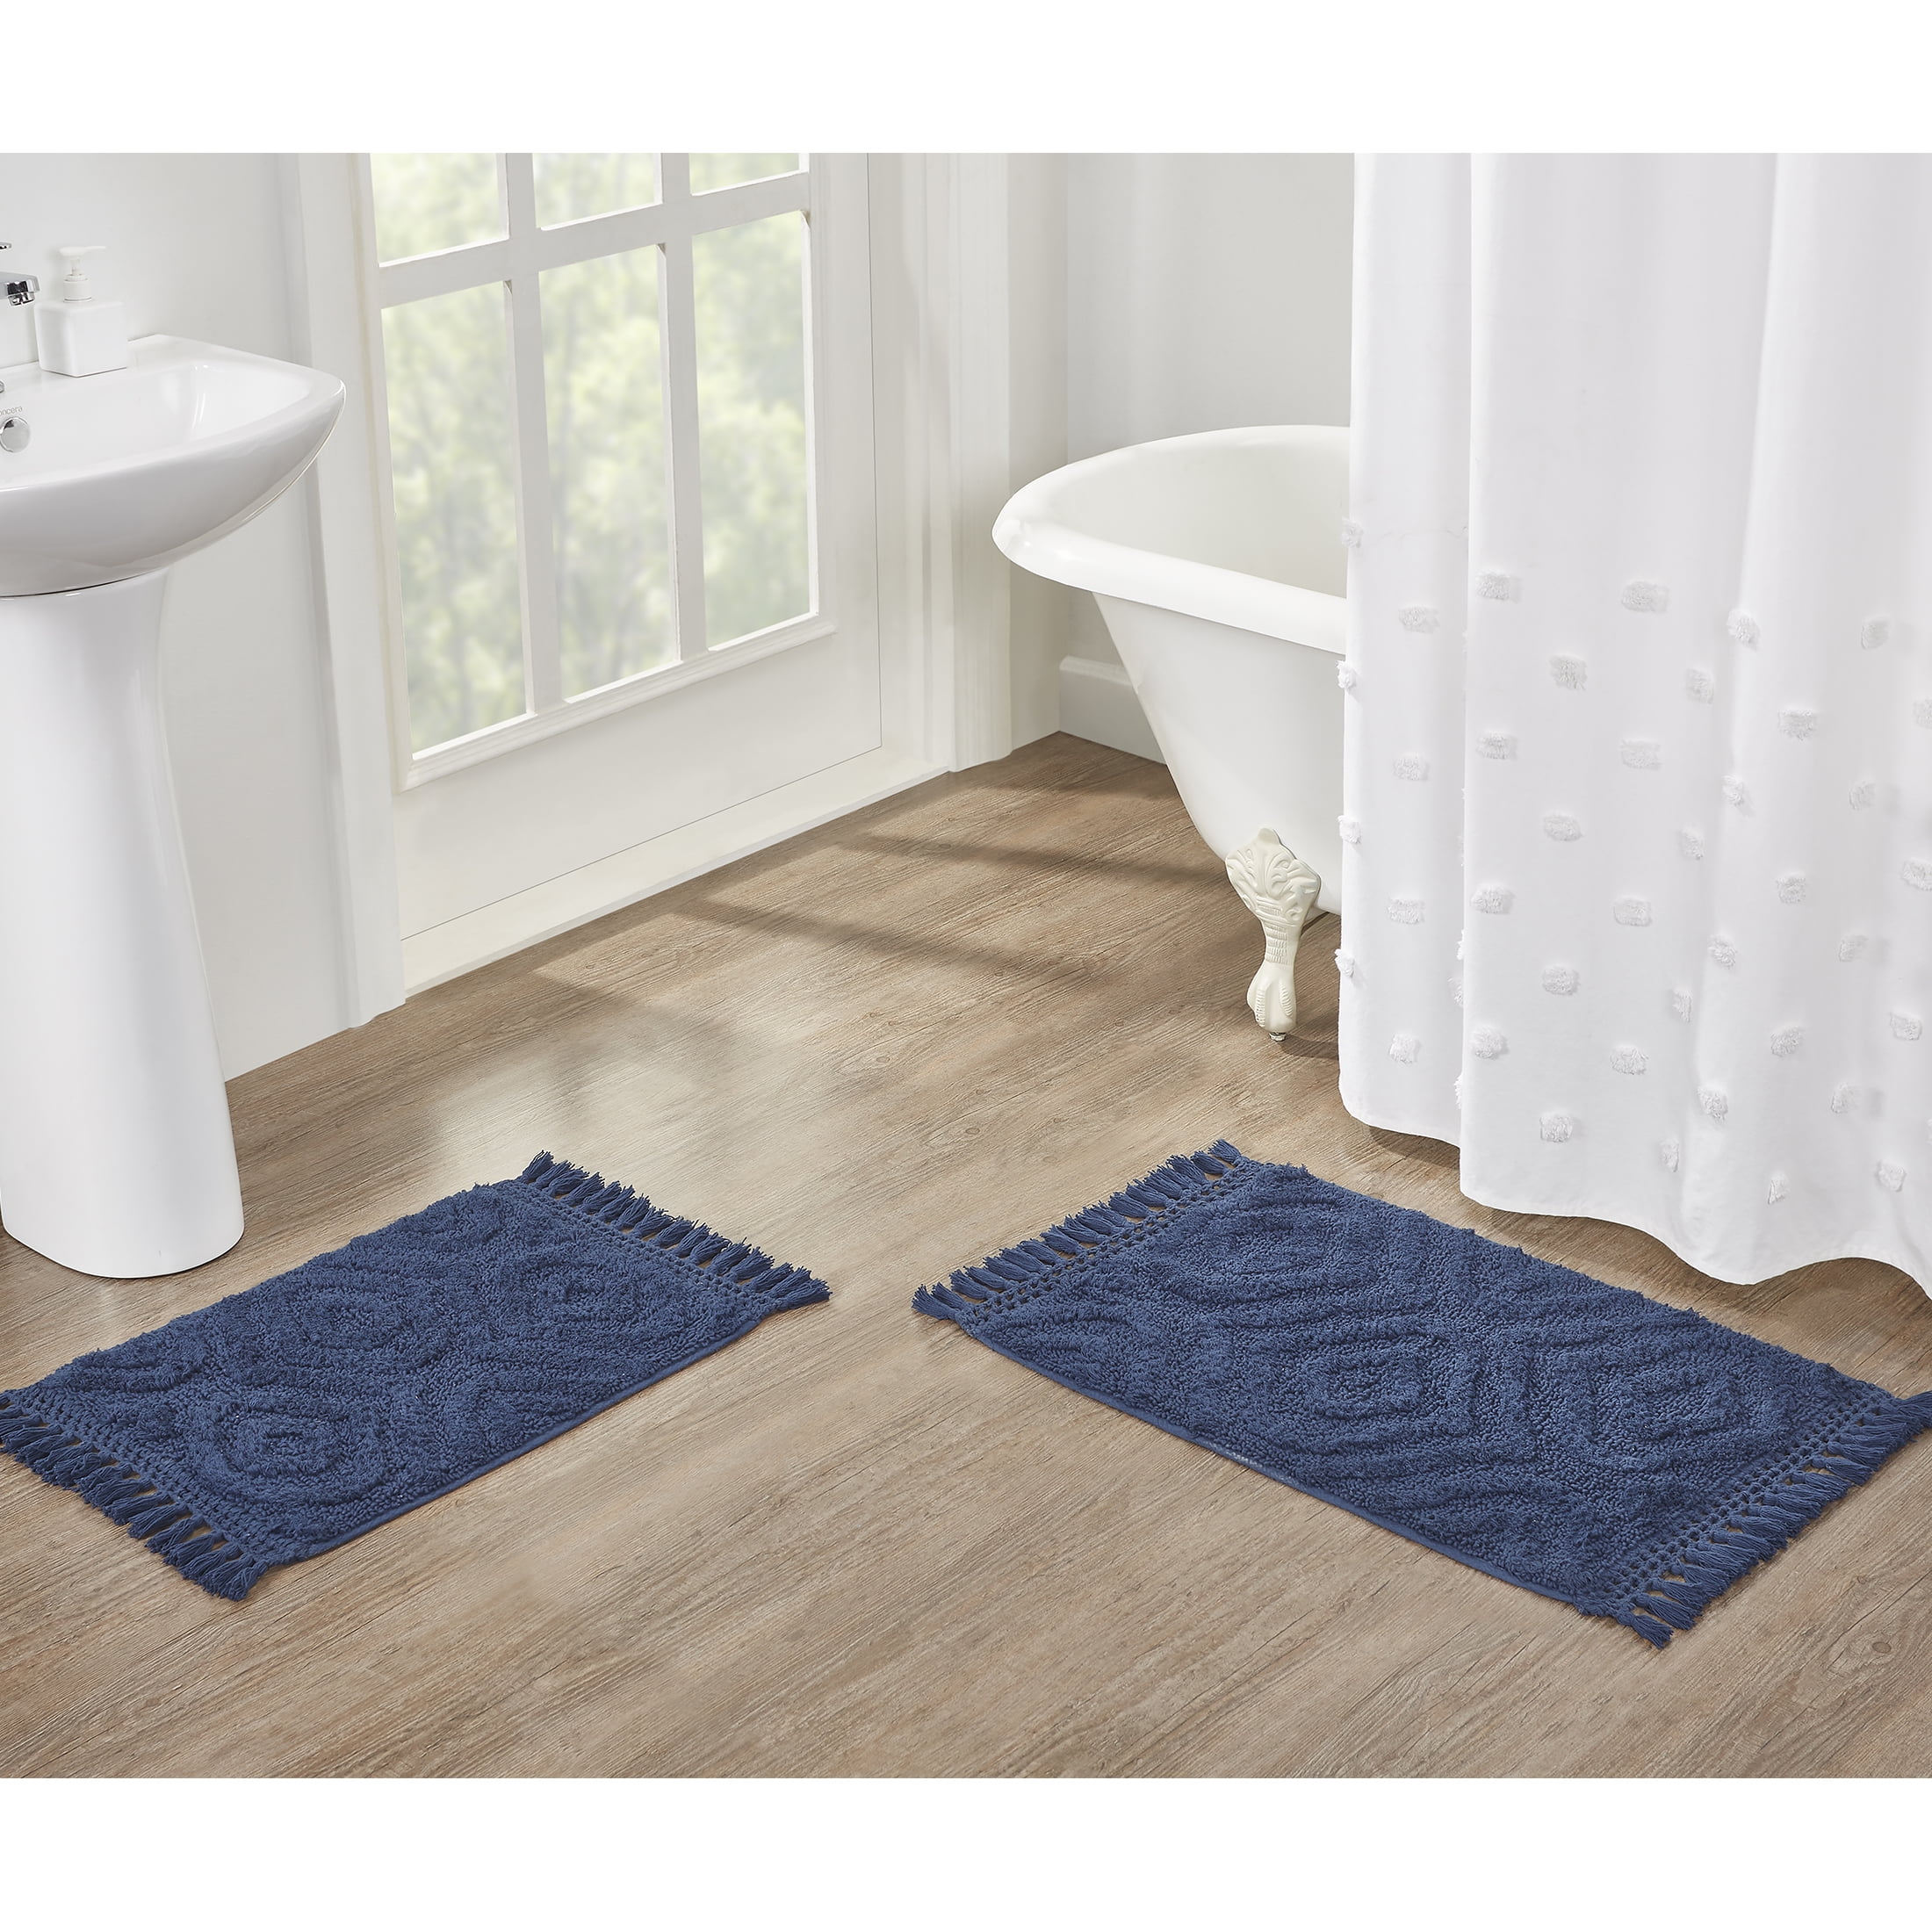 Bohemian Flowers Bathroom Shower Curtain Toilet Cover Bath Mat Rugs Carpets Set 